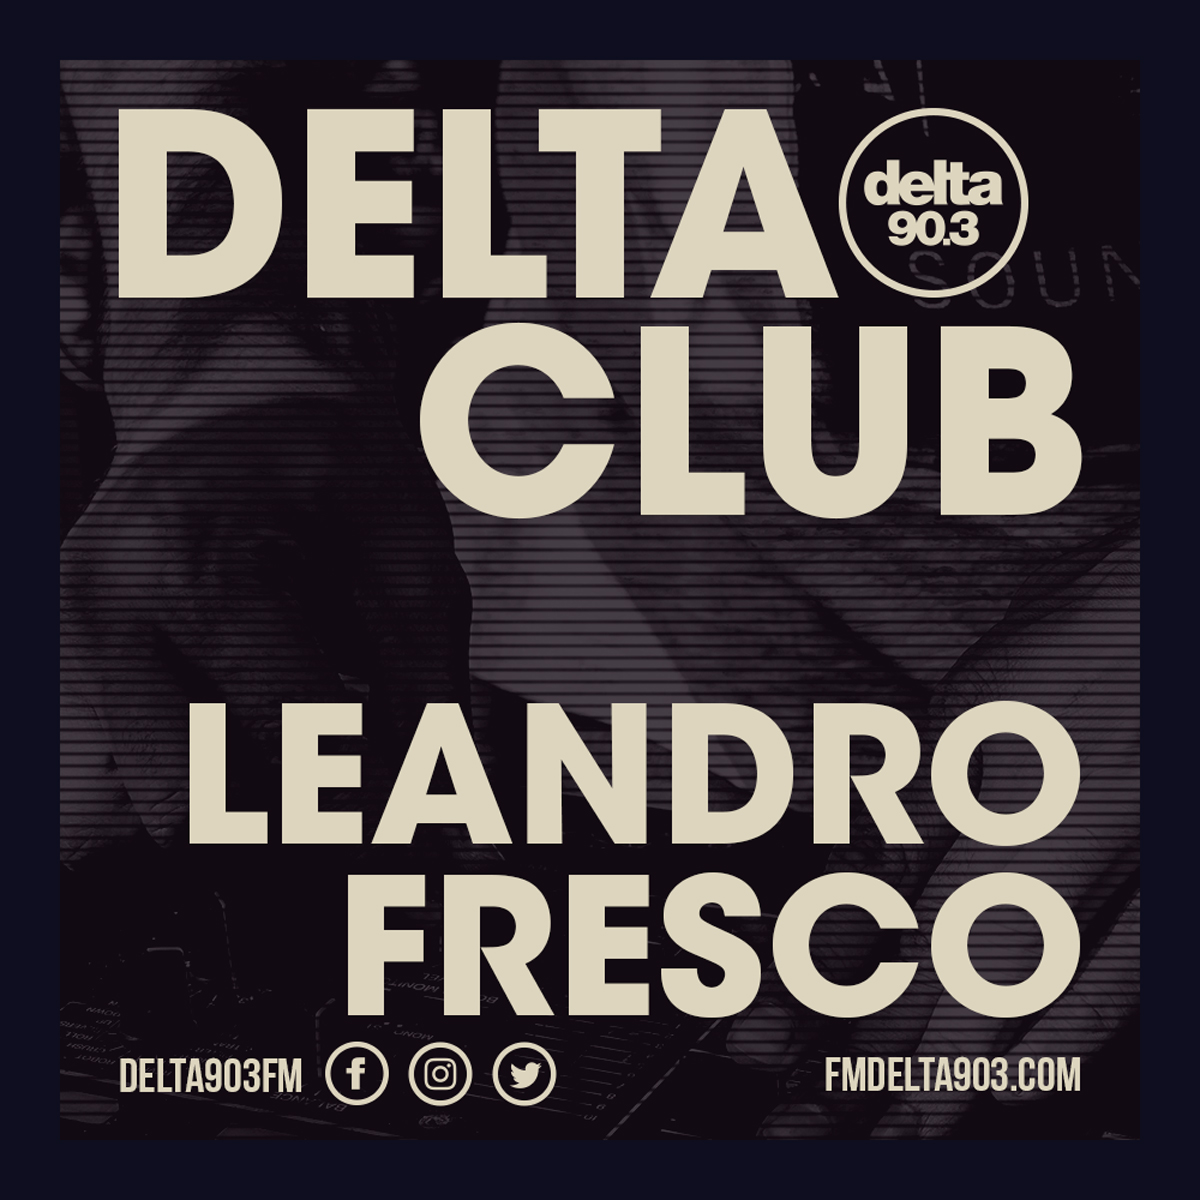 Delta Podcasts - Delta Club presents Leandro Fresco (26.04.2018)